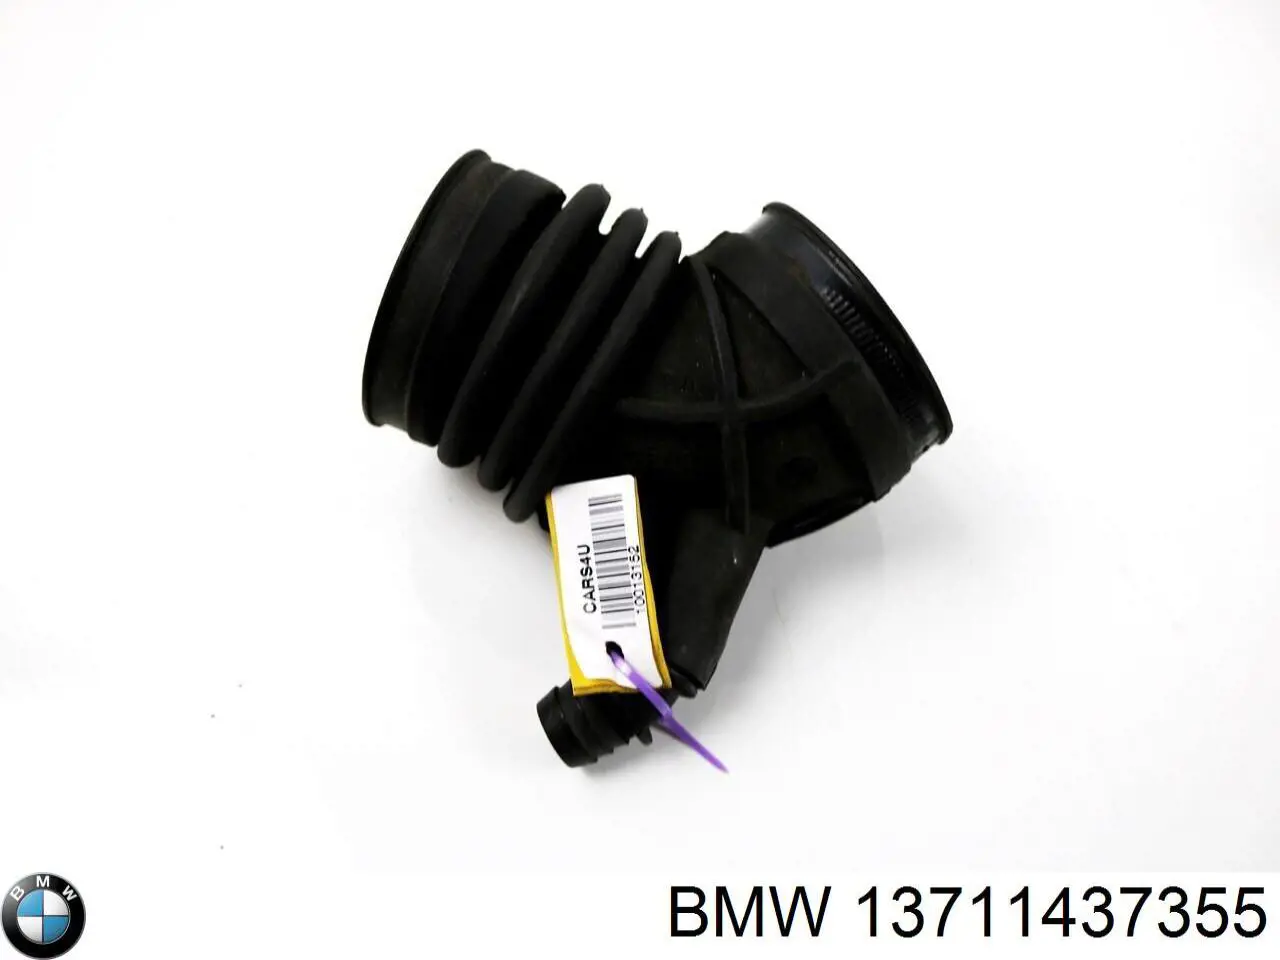 13711437355 BMW tubo flexible de aspiración, cuerpo mariposa